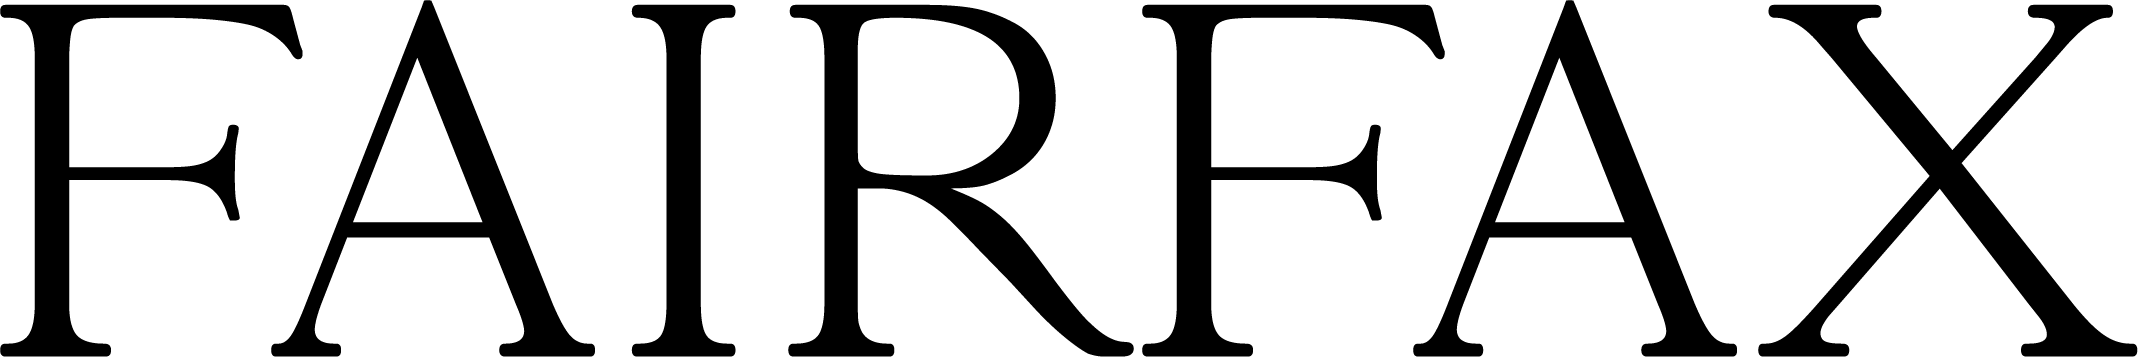 Banyan Street Capital Logo (2138x357)